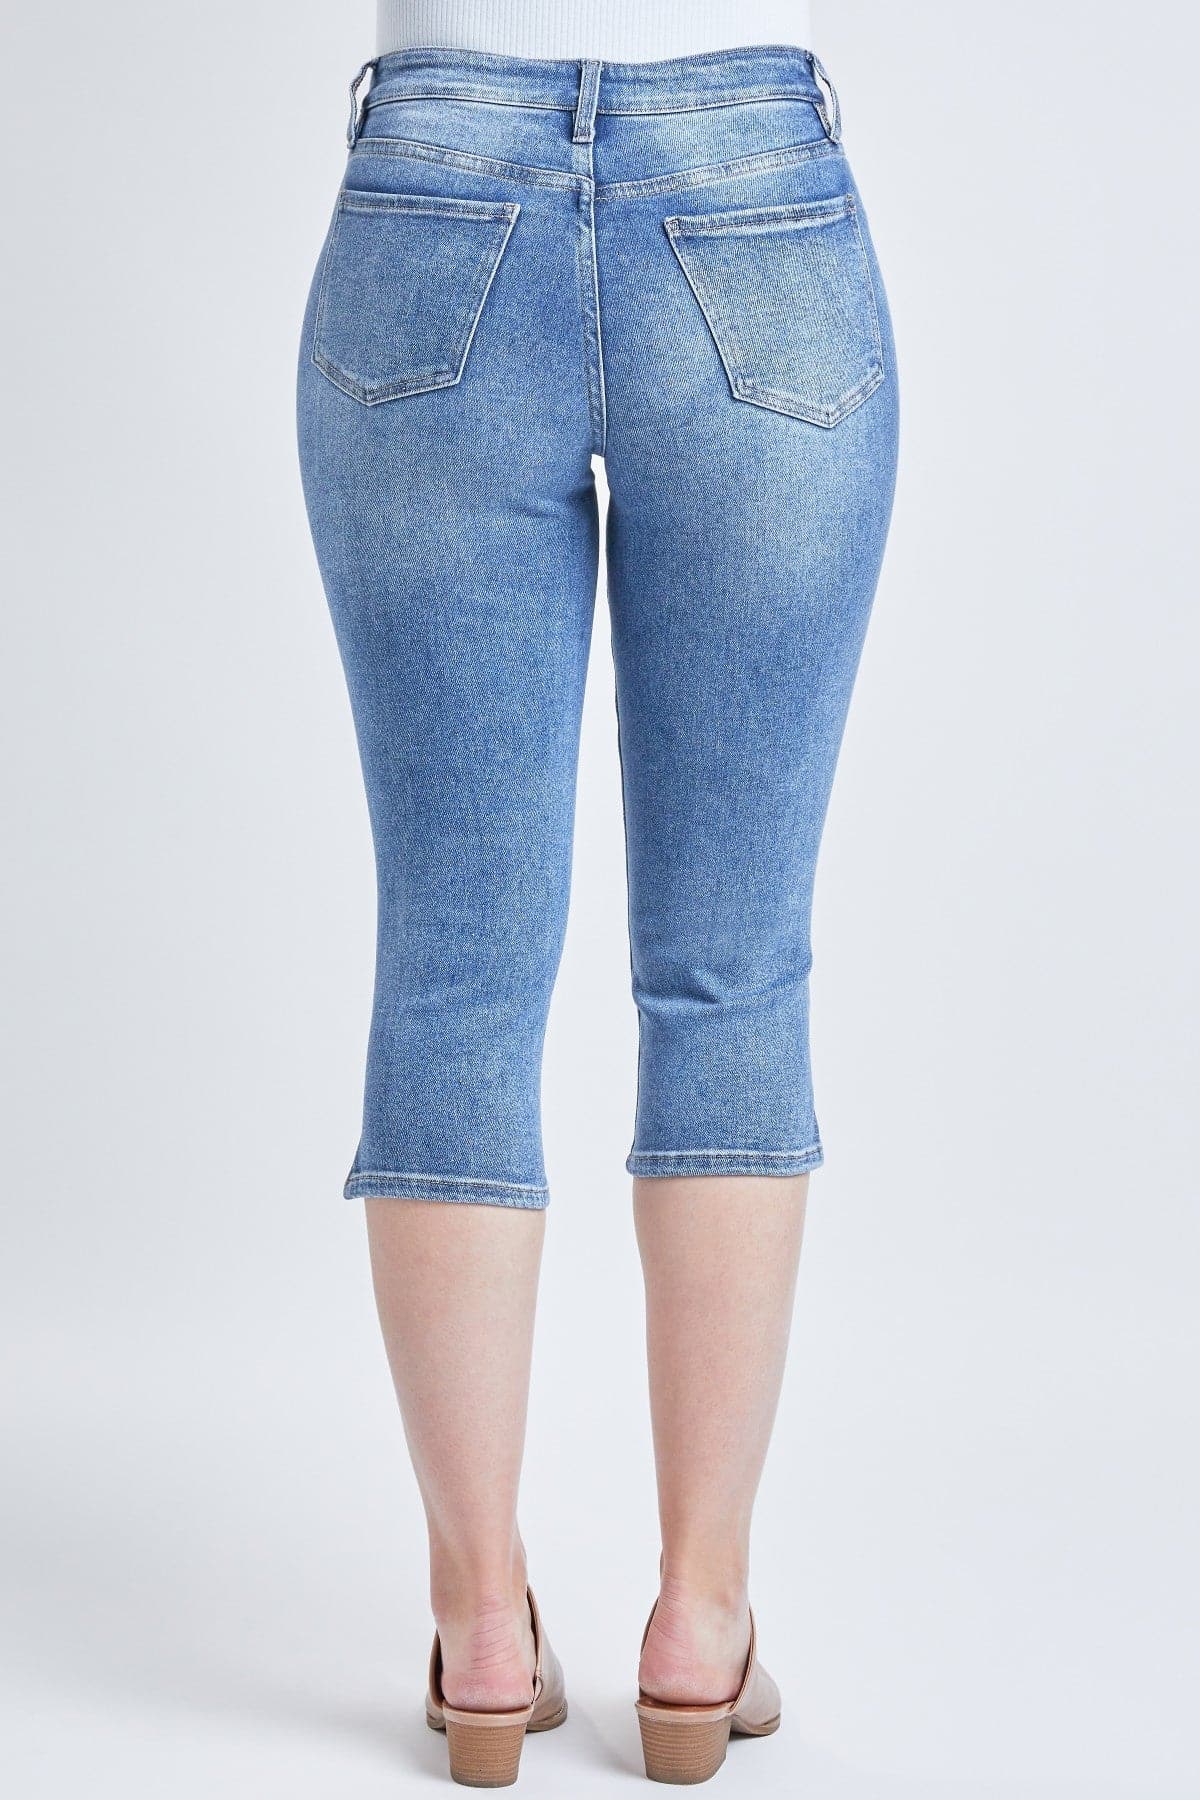 Women Vintage Exposed Button Capri Jeans With Side Slit Hem